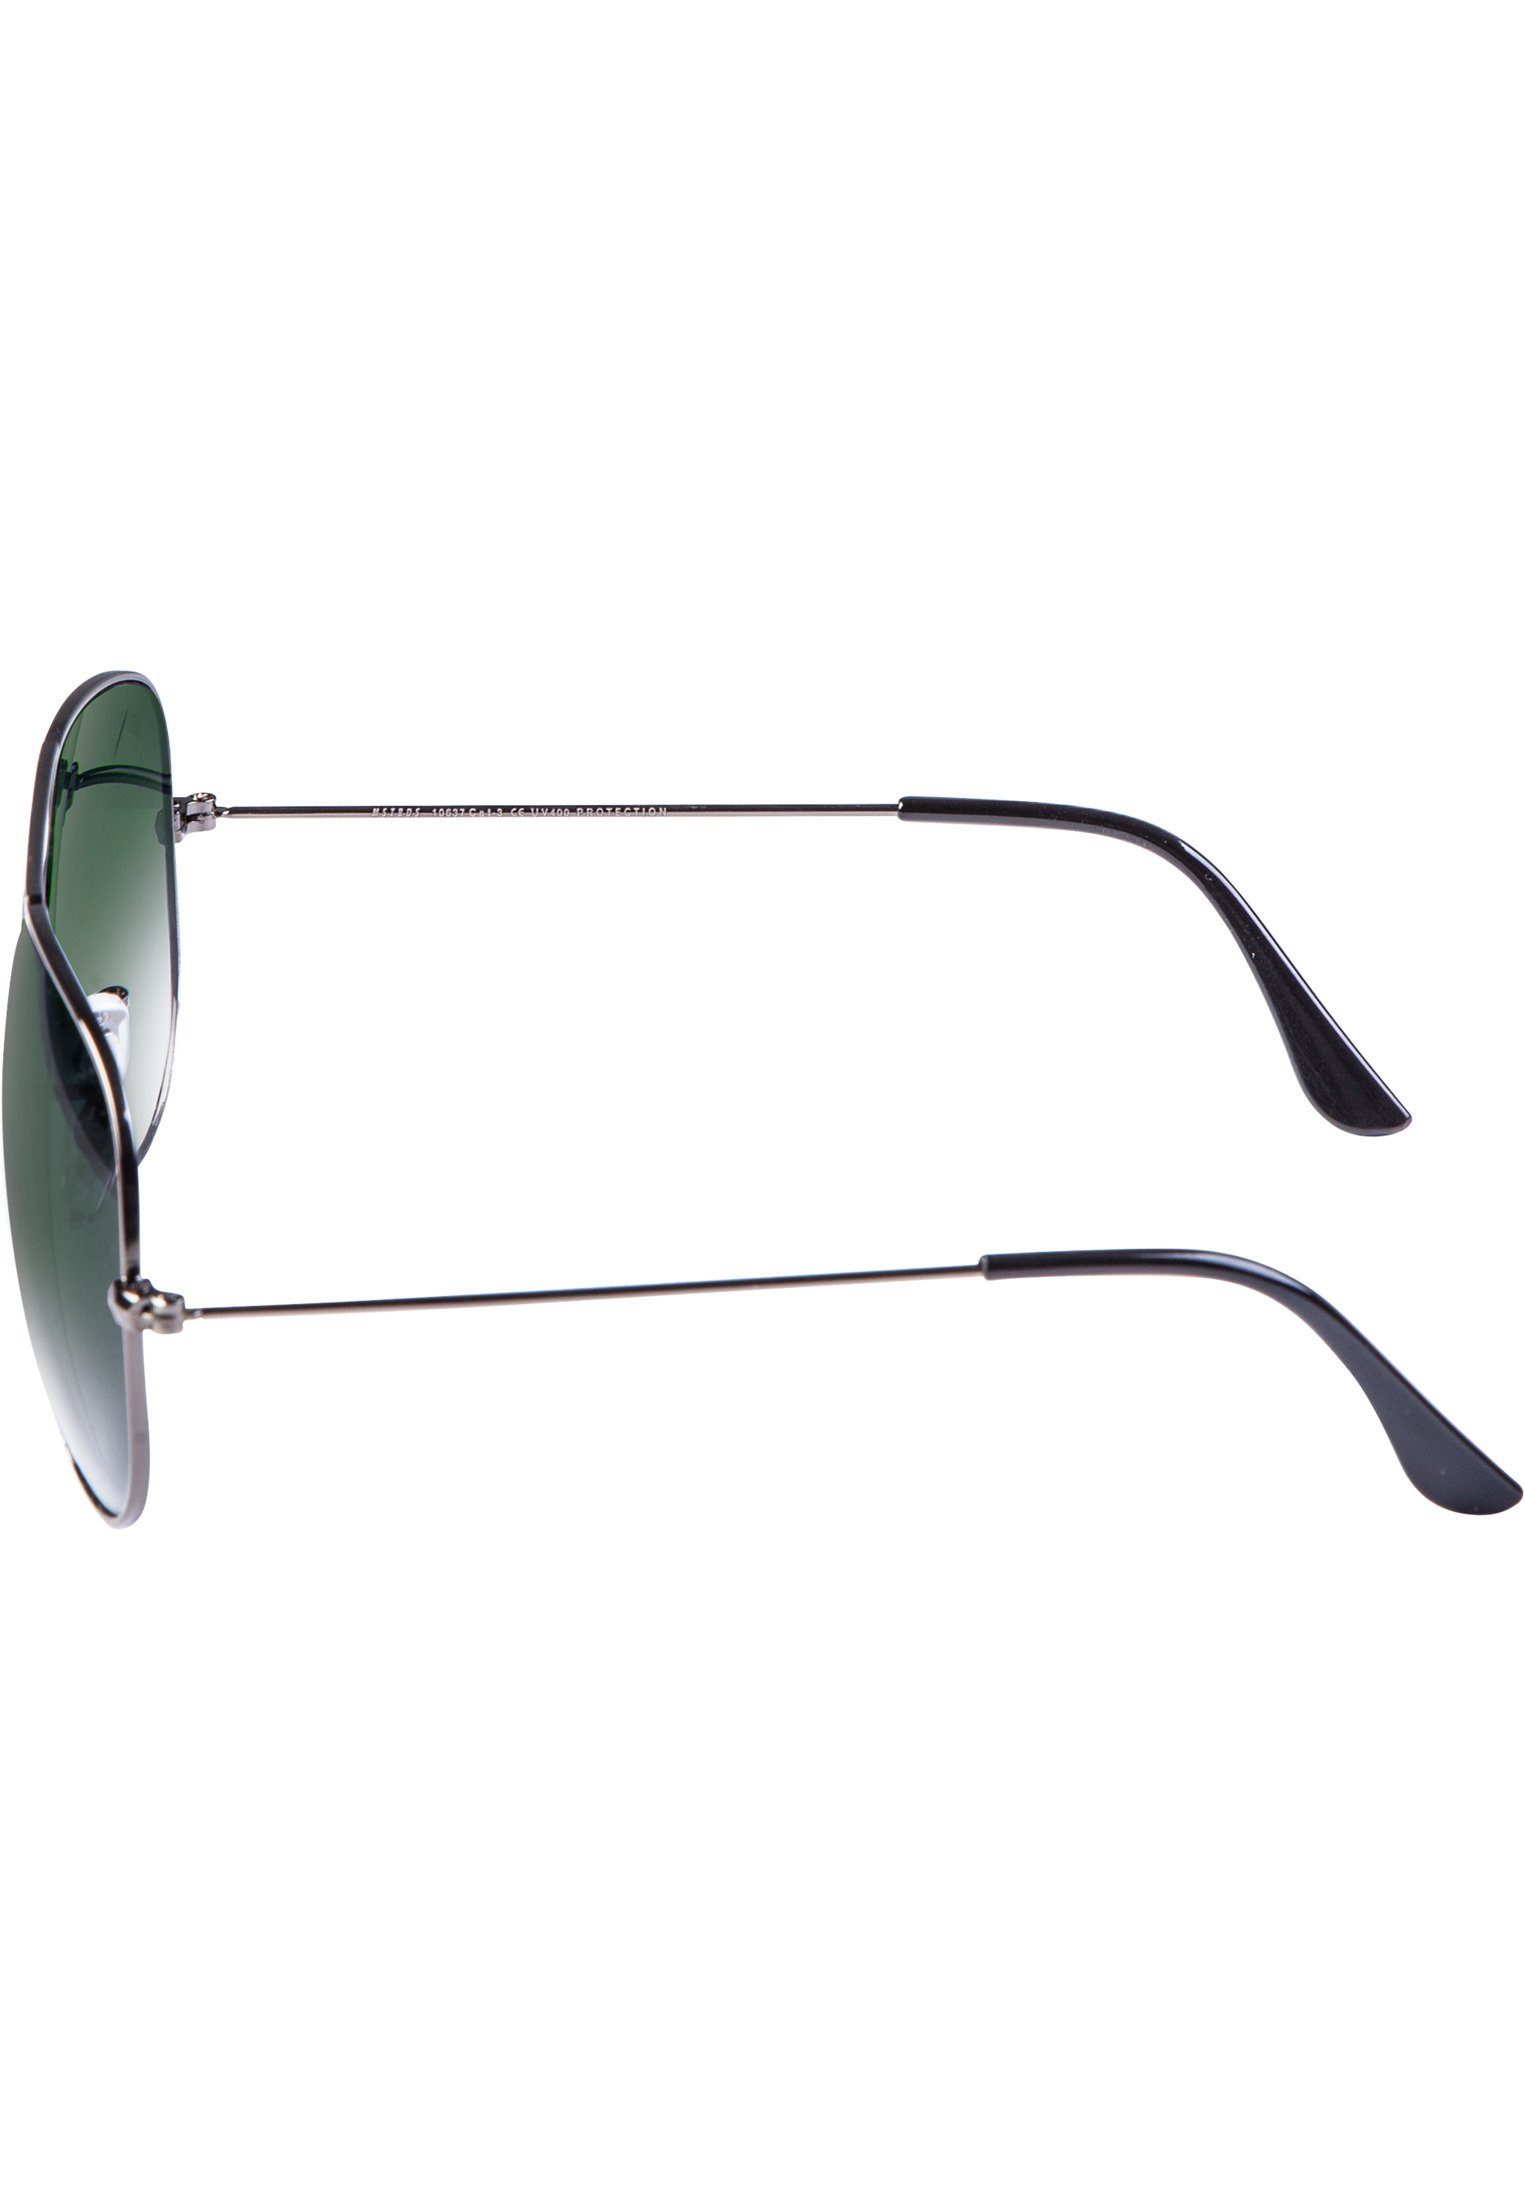 MSTRDS Youth Sonnenbrille PureAv Sunglasses gun/green Accessoires